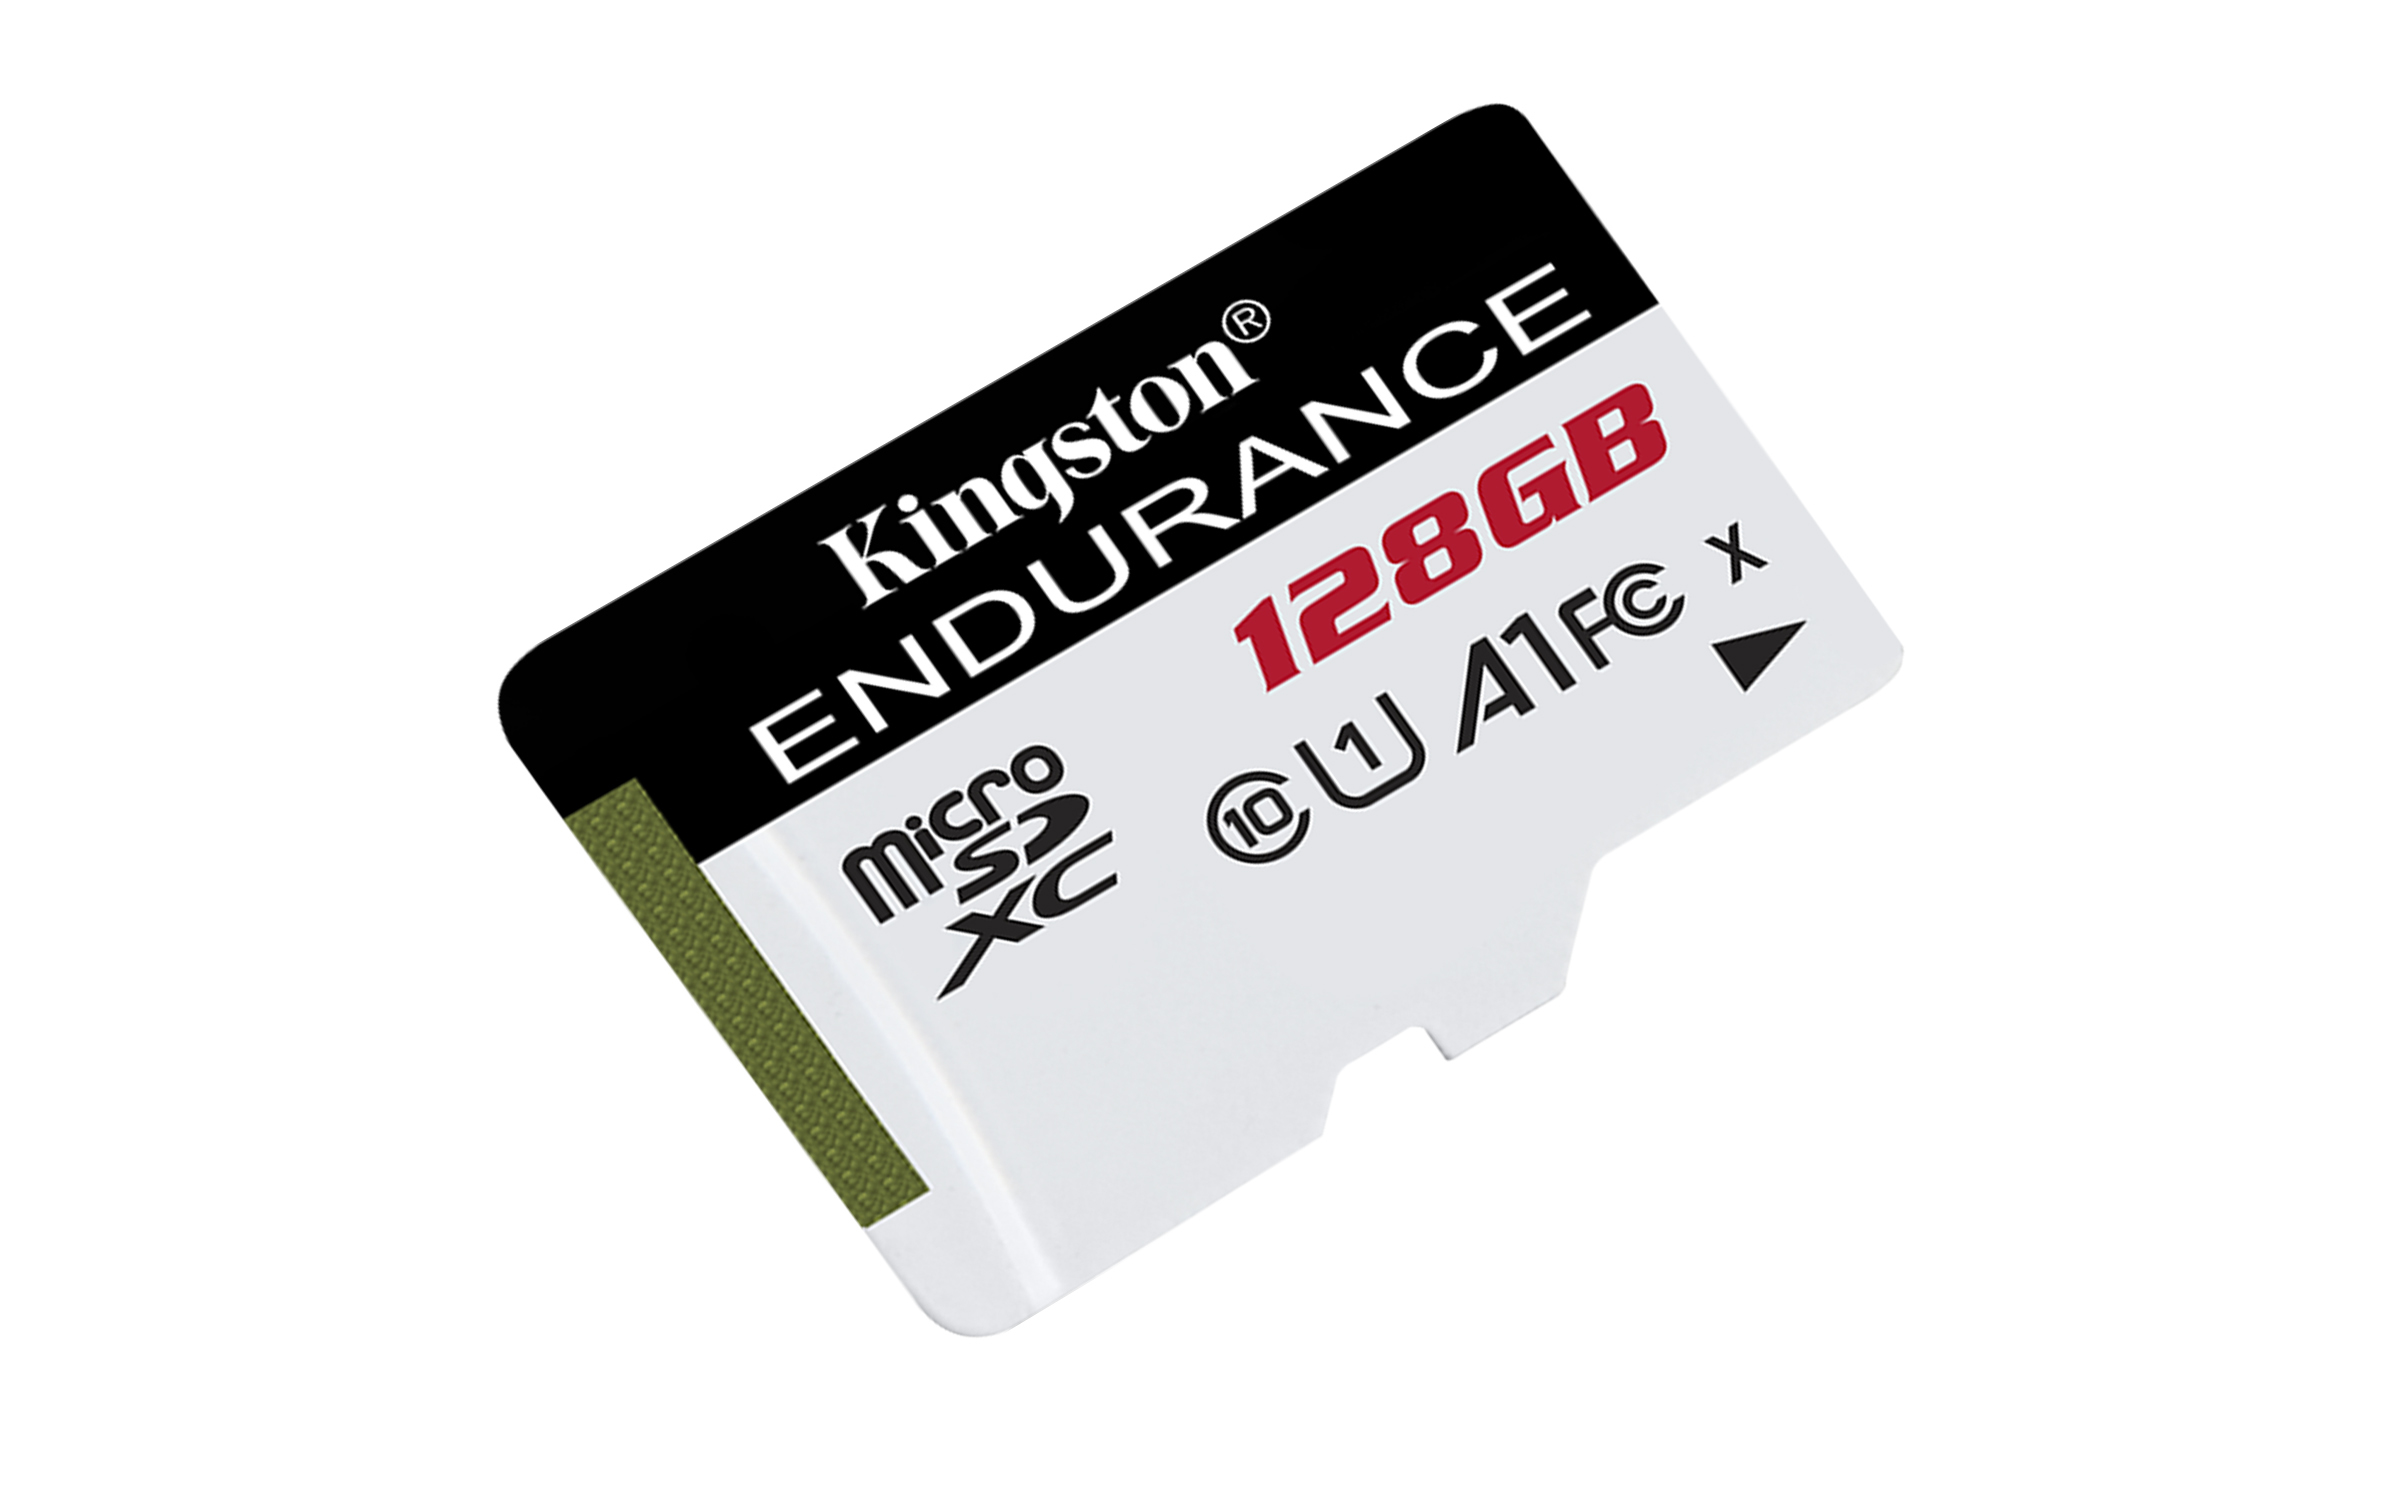 Kingston Technology High Endurance 128 GB MicroSD UHS-I Klass 10